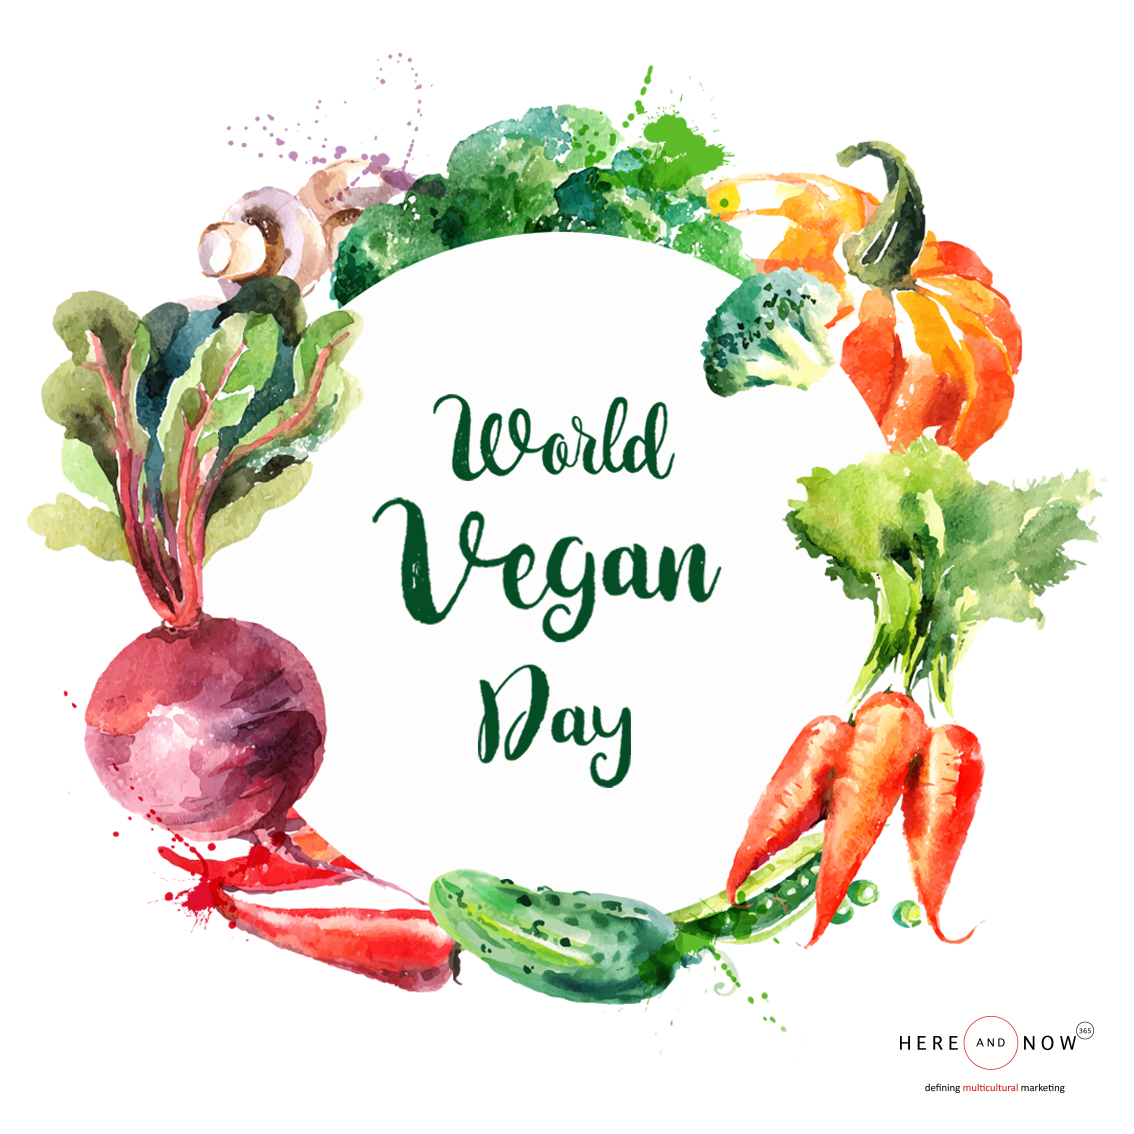 world vegan day vegetables illustration